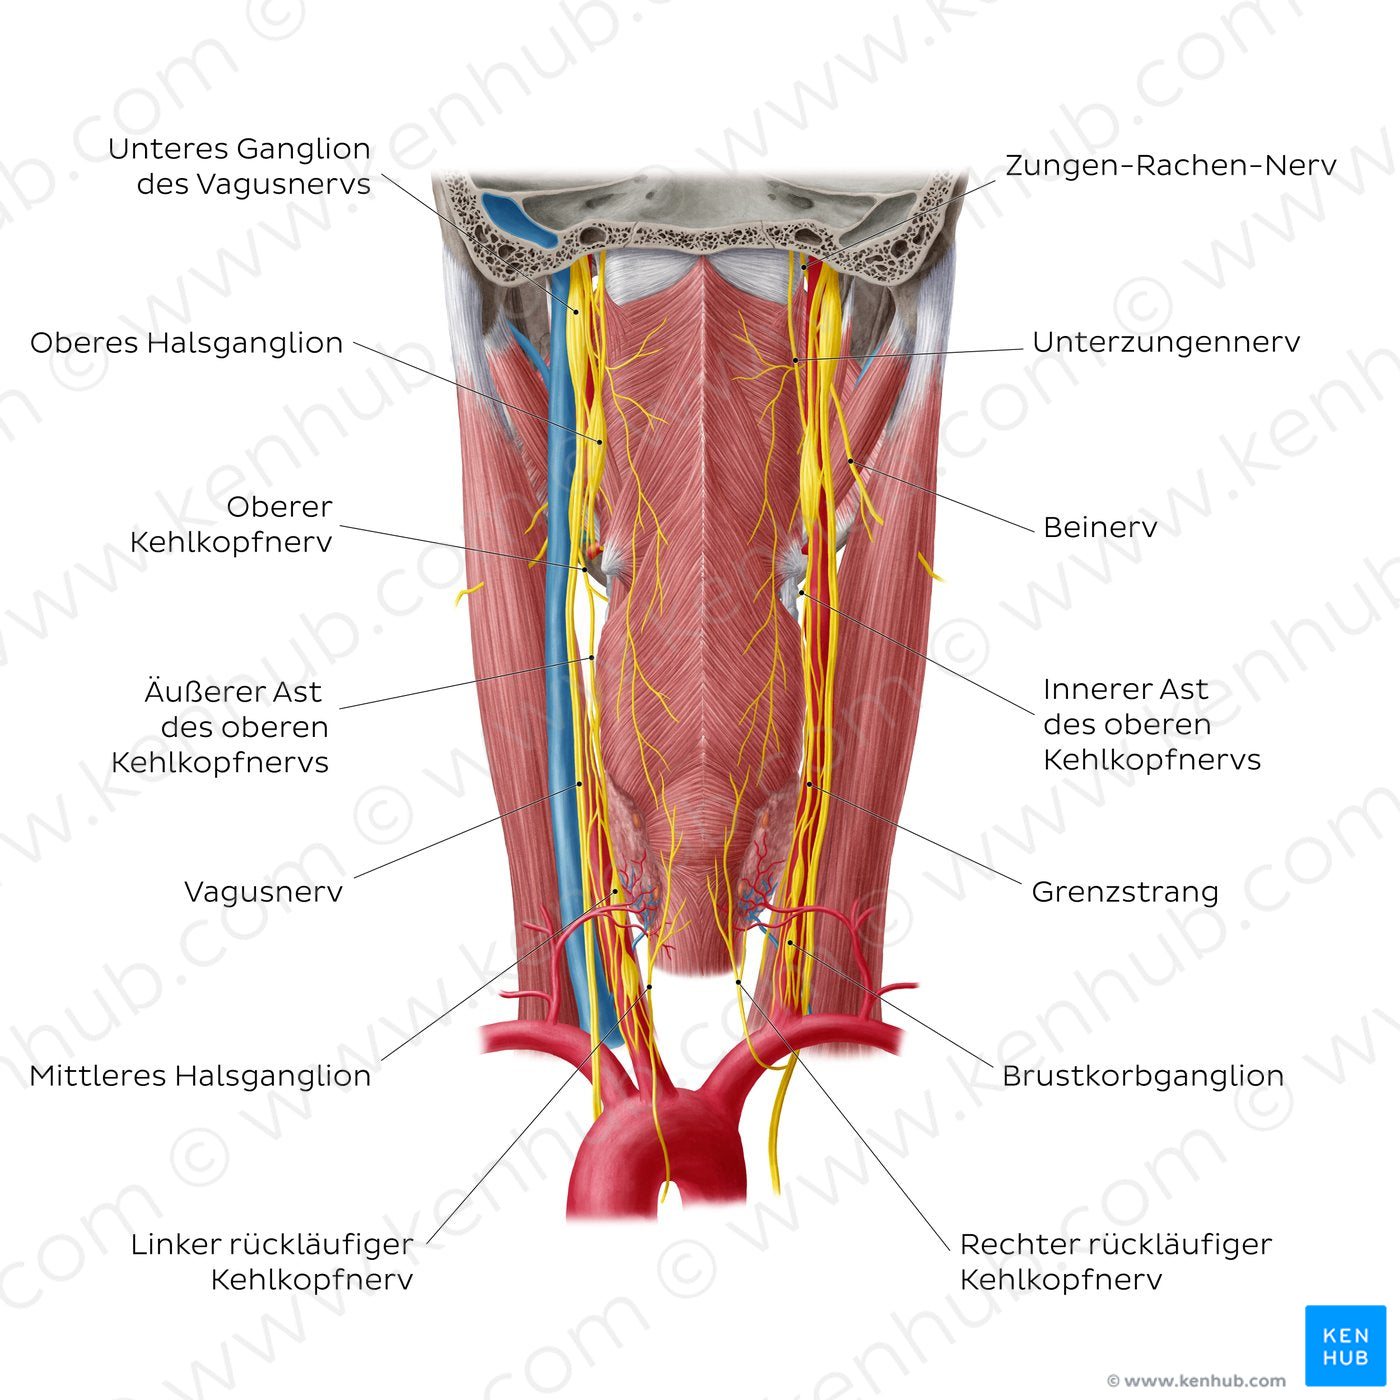 Nerves of the pharynx (German)